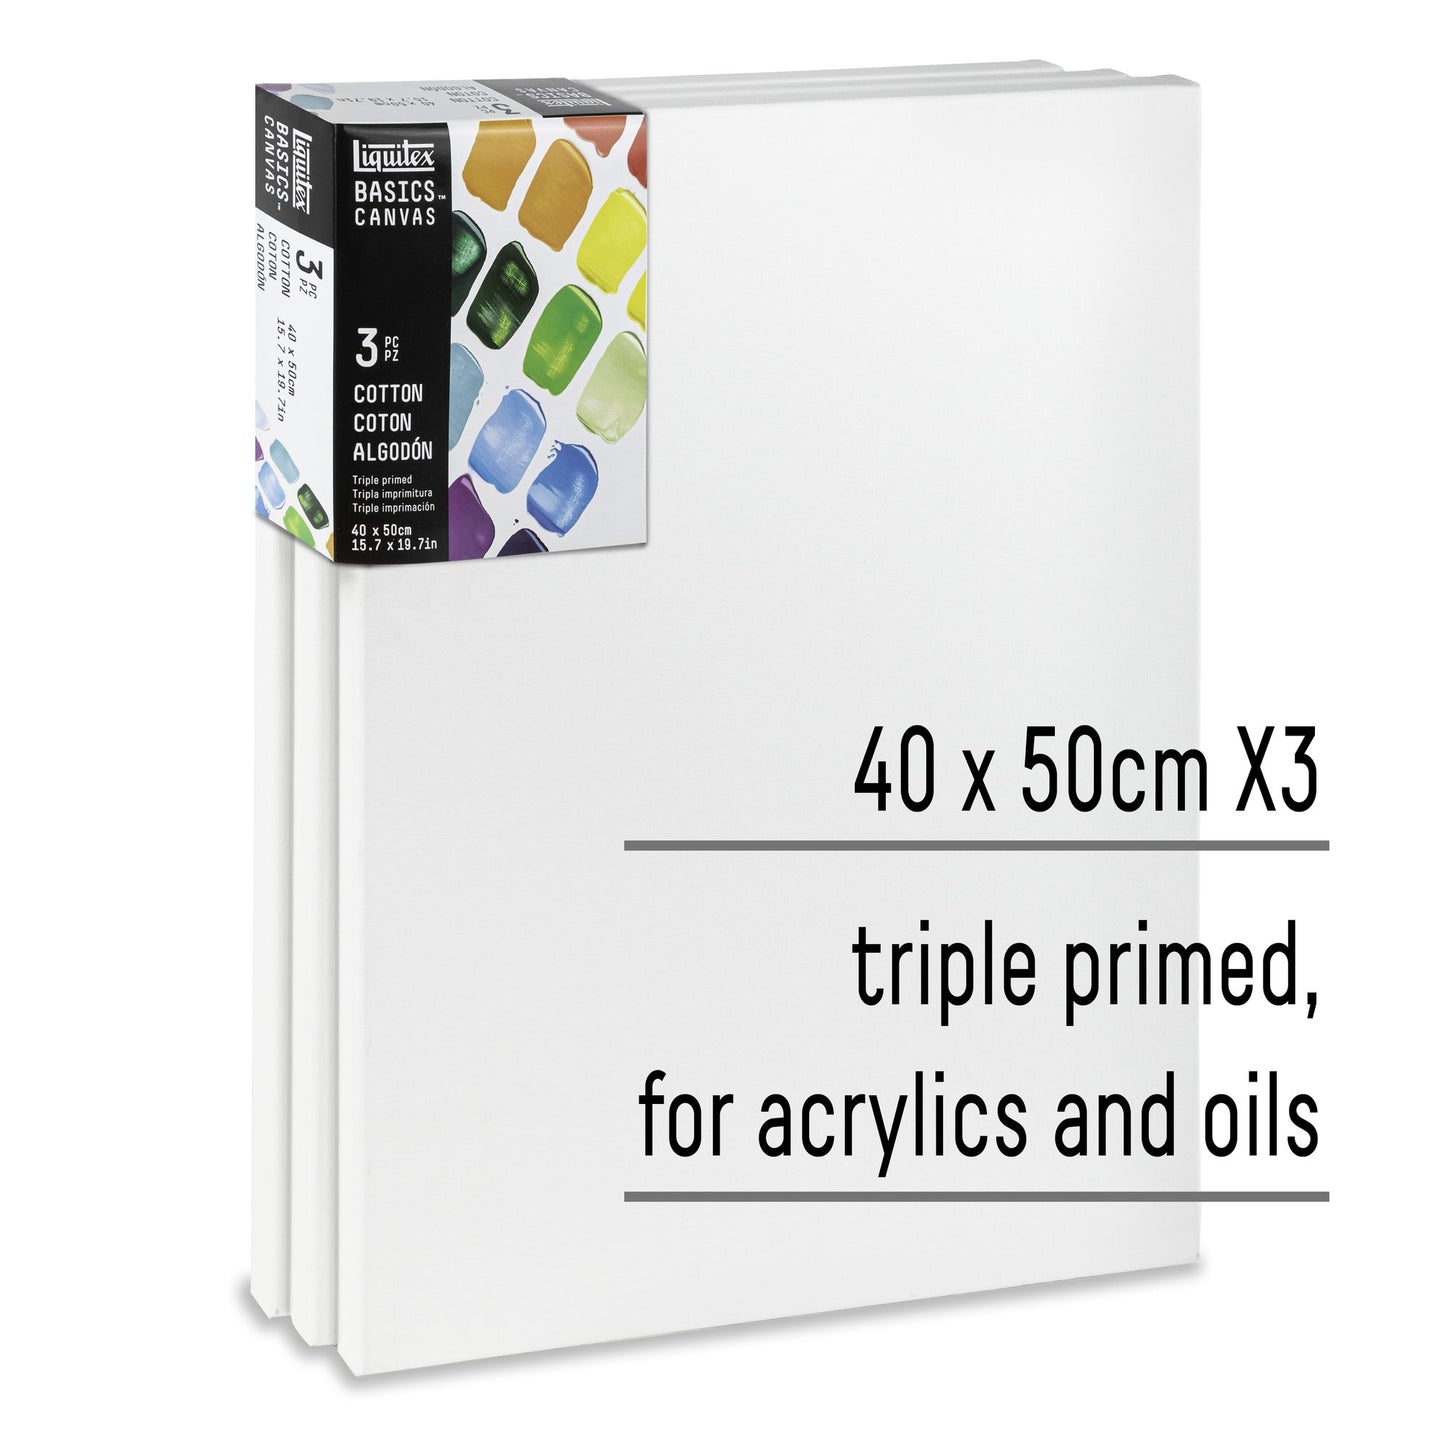 Liquitex Basics Set Of 3 Cotton Canvas 40x50cm